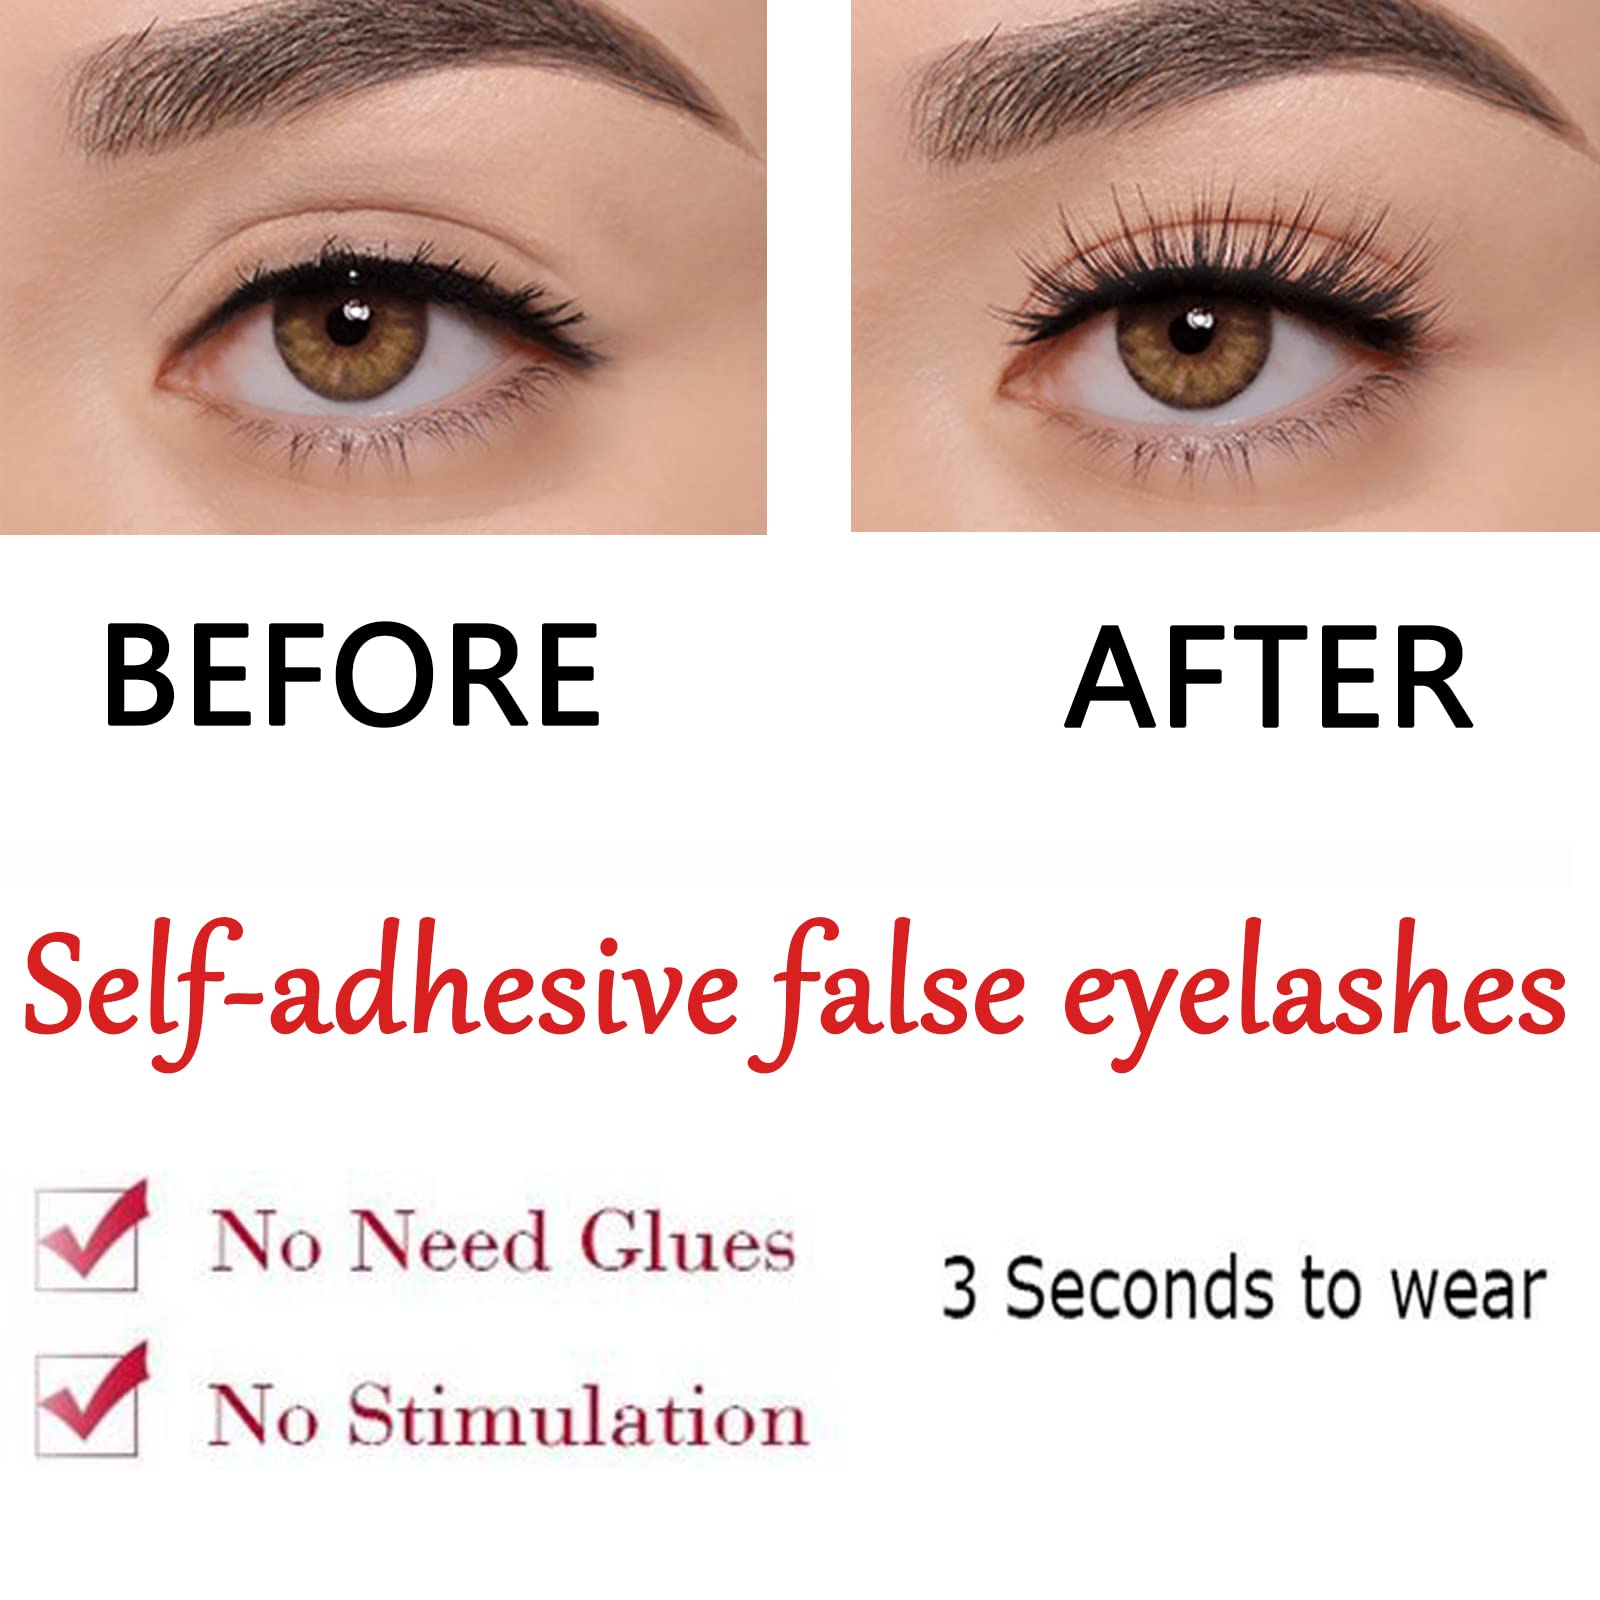 Bellefin Self Adhesive False Eyelashes Natural Look Fake Eyelashes No Glue Self Adhesive Eye Lashes Pack for Women Girls DIY Eye Lash Extensions #08